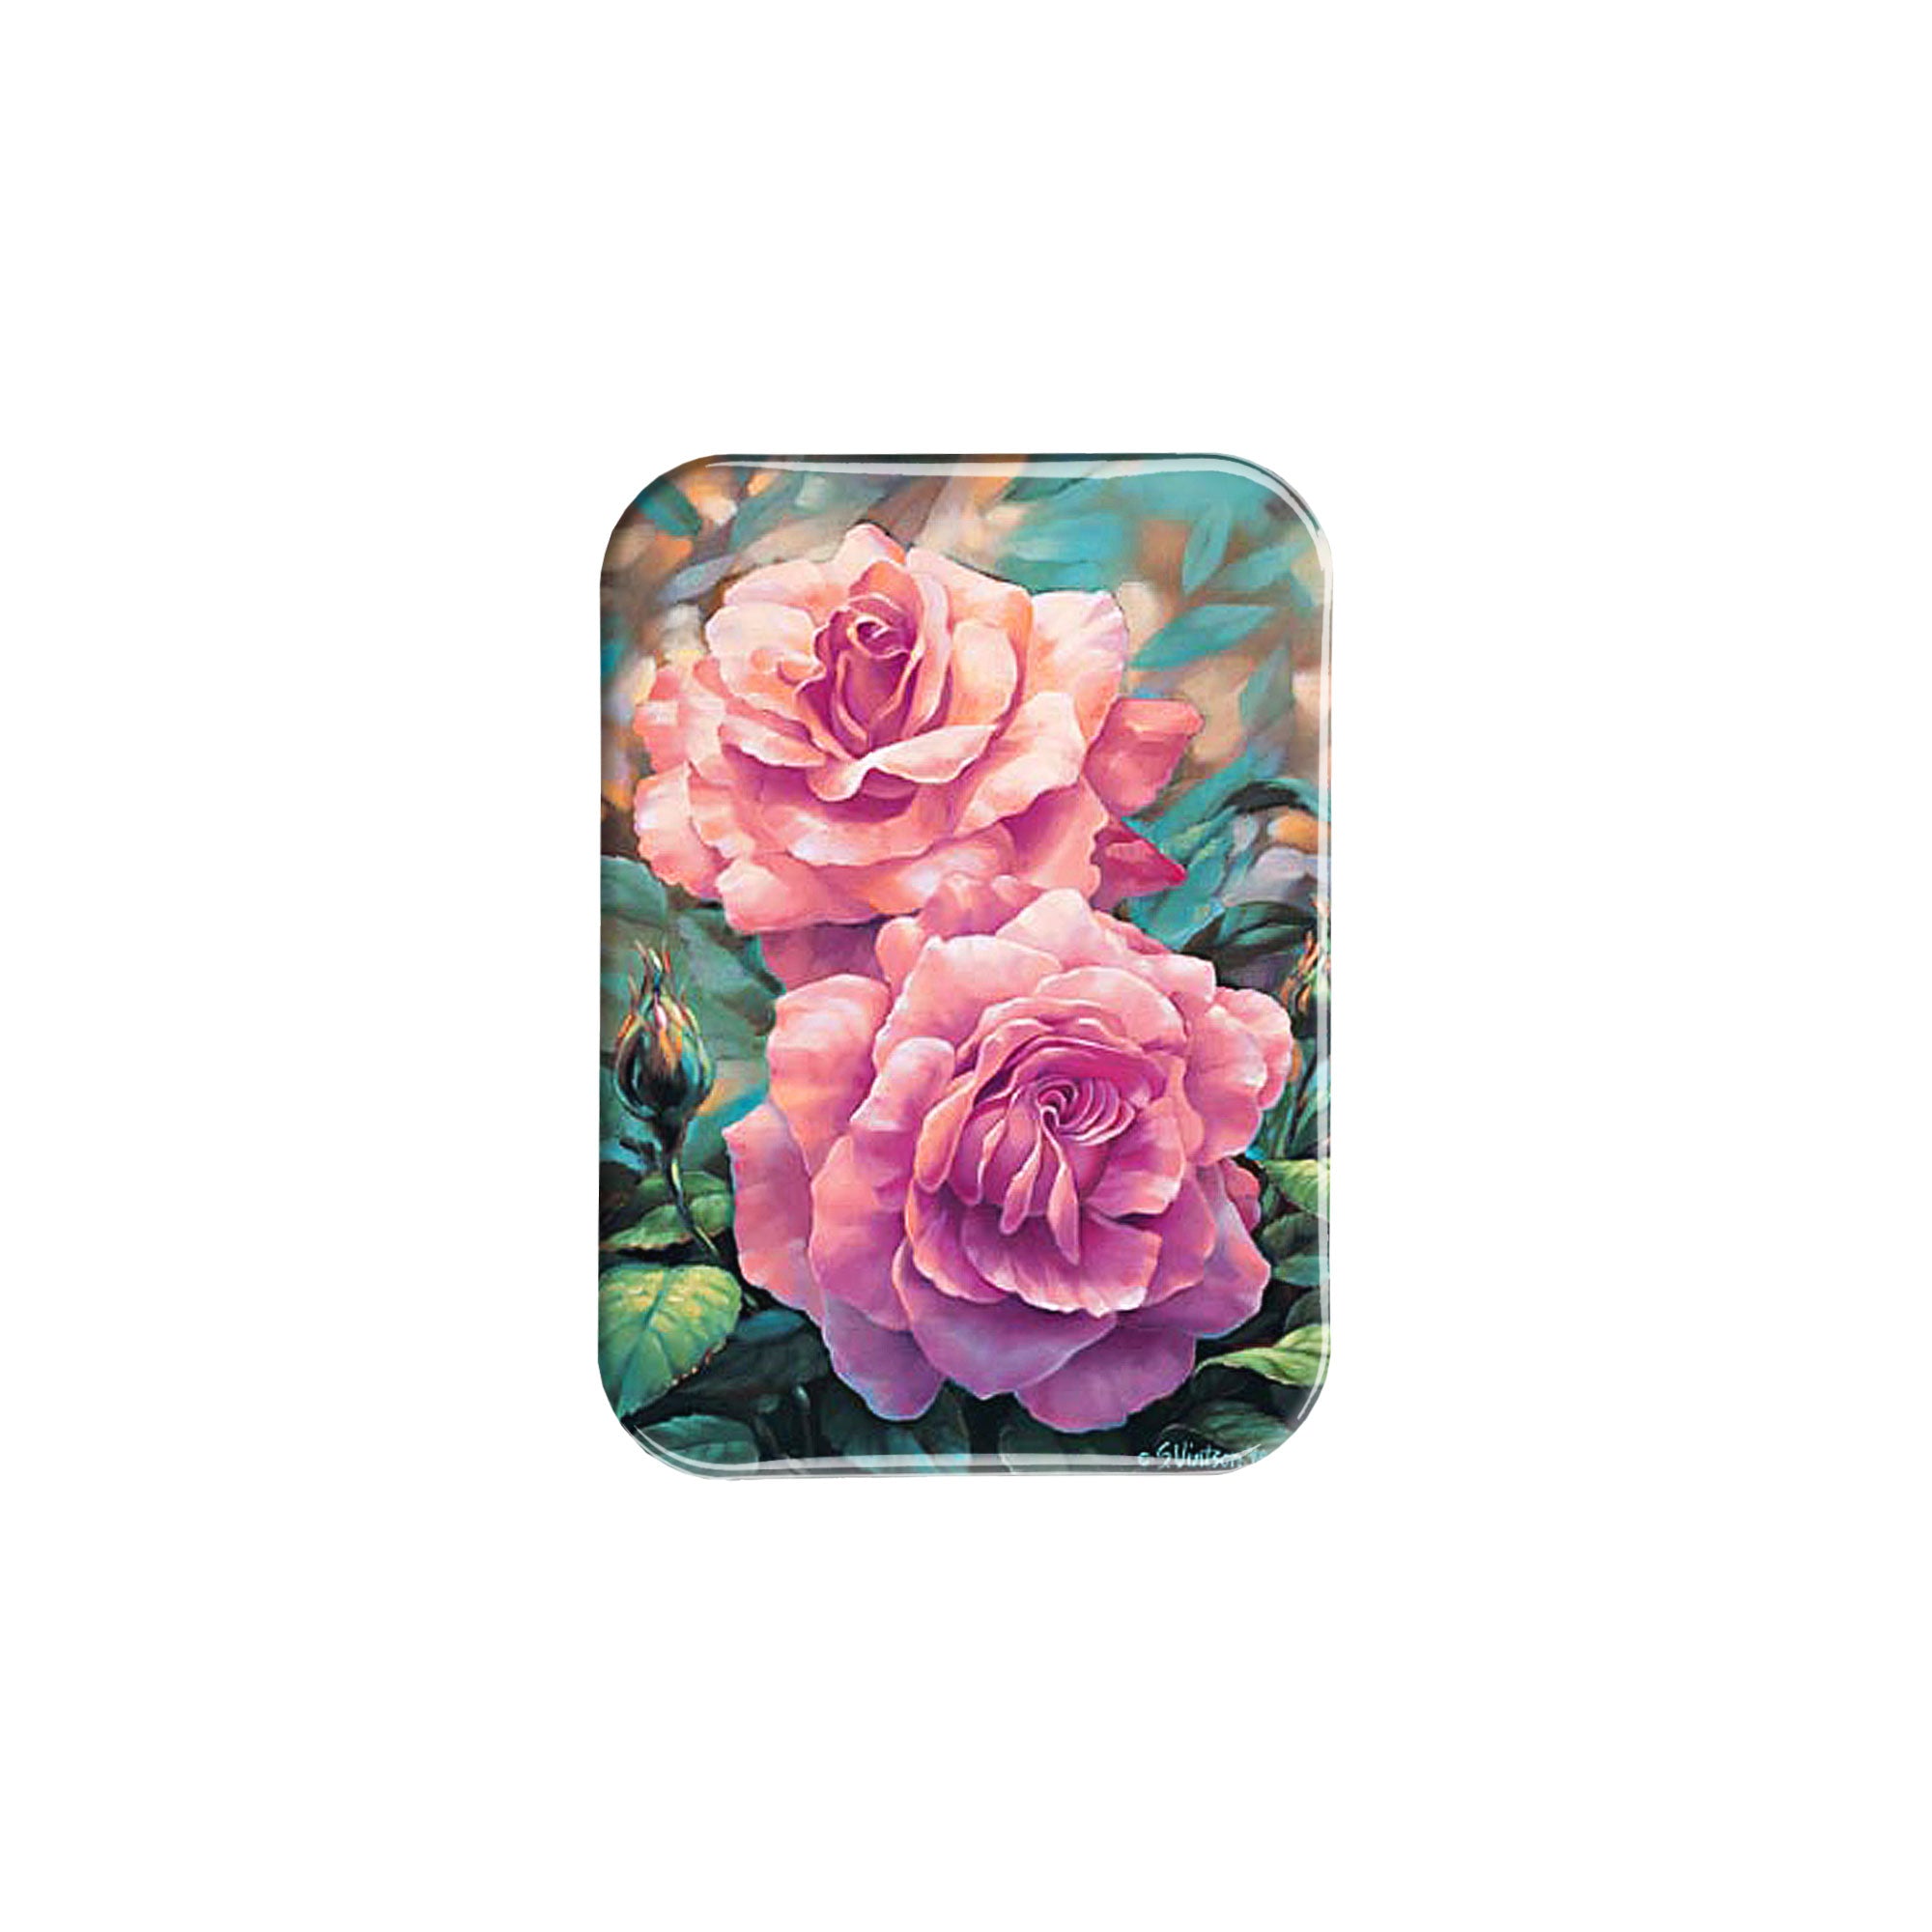 "Rose Patch Beauty" - 2.5" X 3.5" Rectangle Fridge Magnets